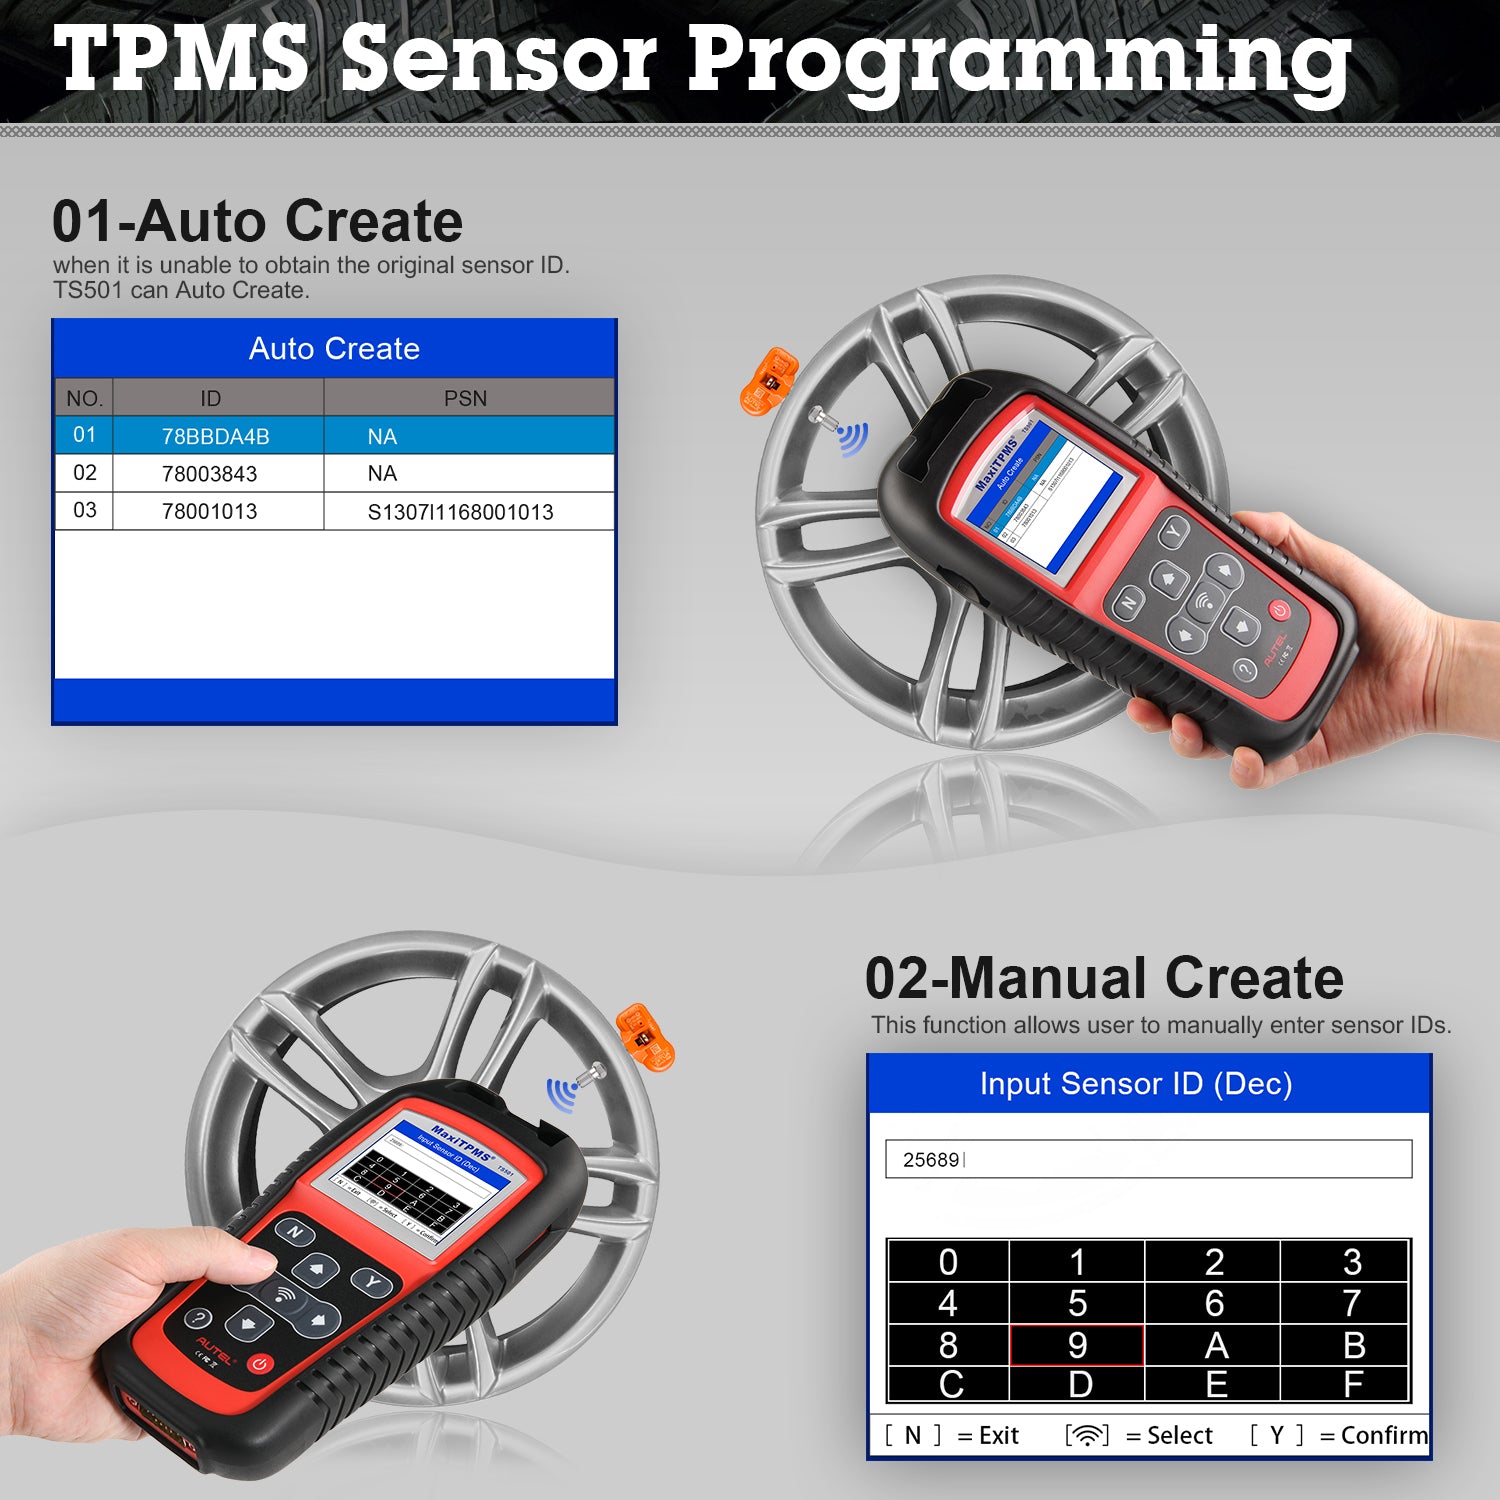 Autel ts501 tpms sensor programming -  Auto Creat and Manual Creat